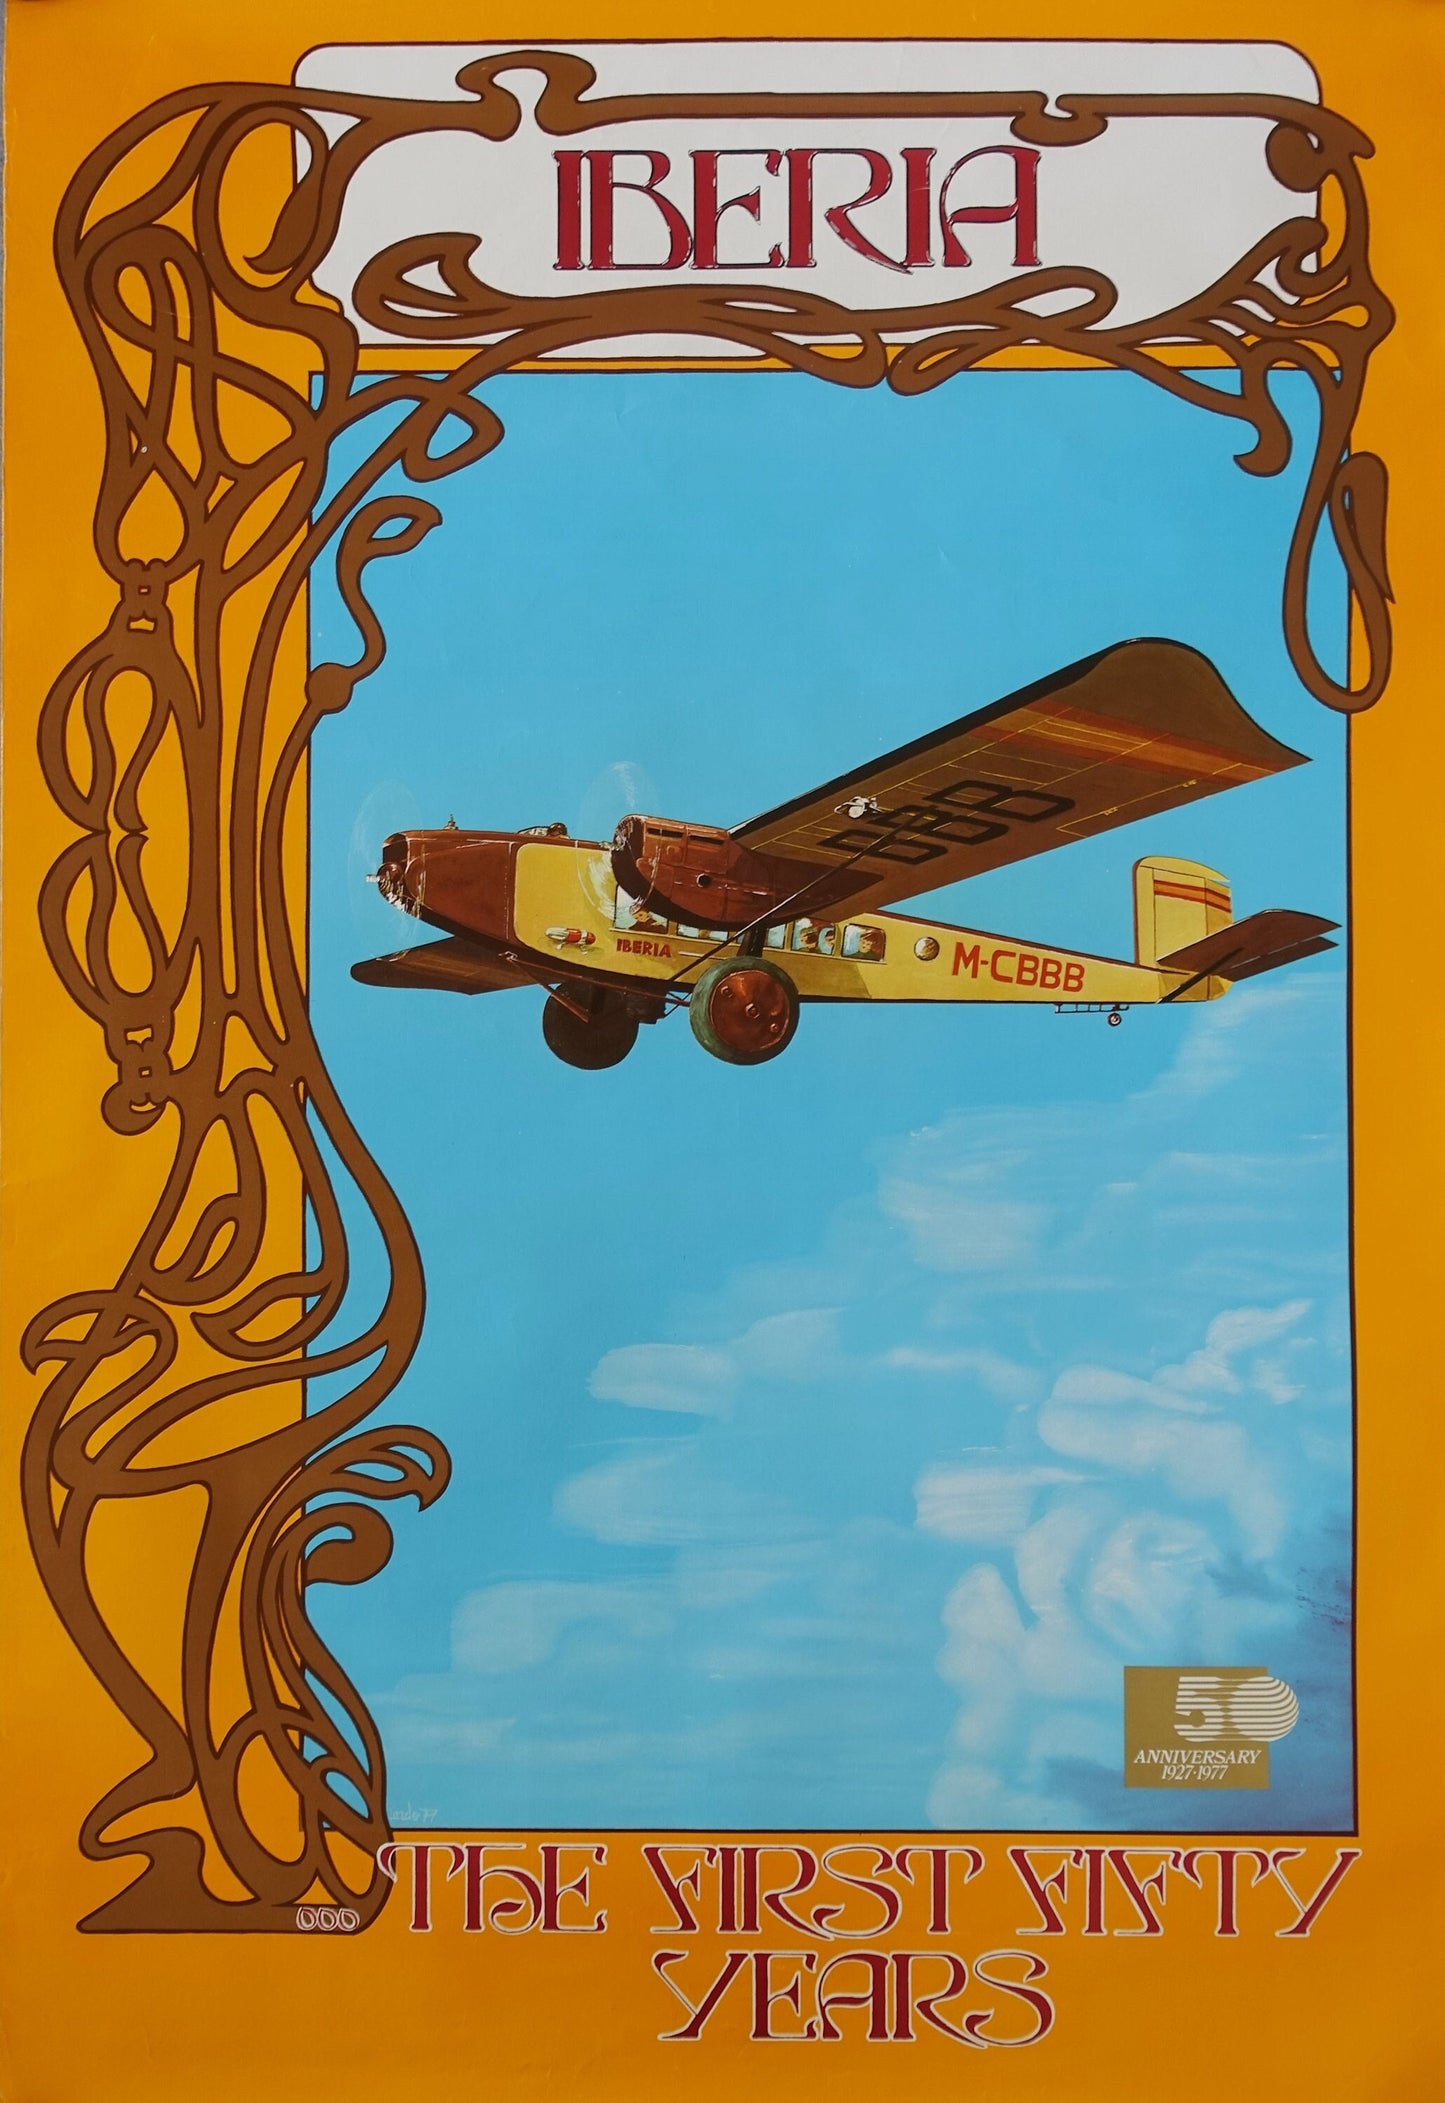 1977 Iberia Travel Poster 50 years anniversary - Original Vintage Poster